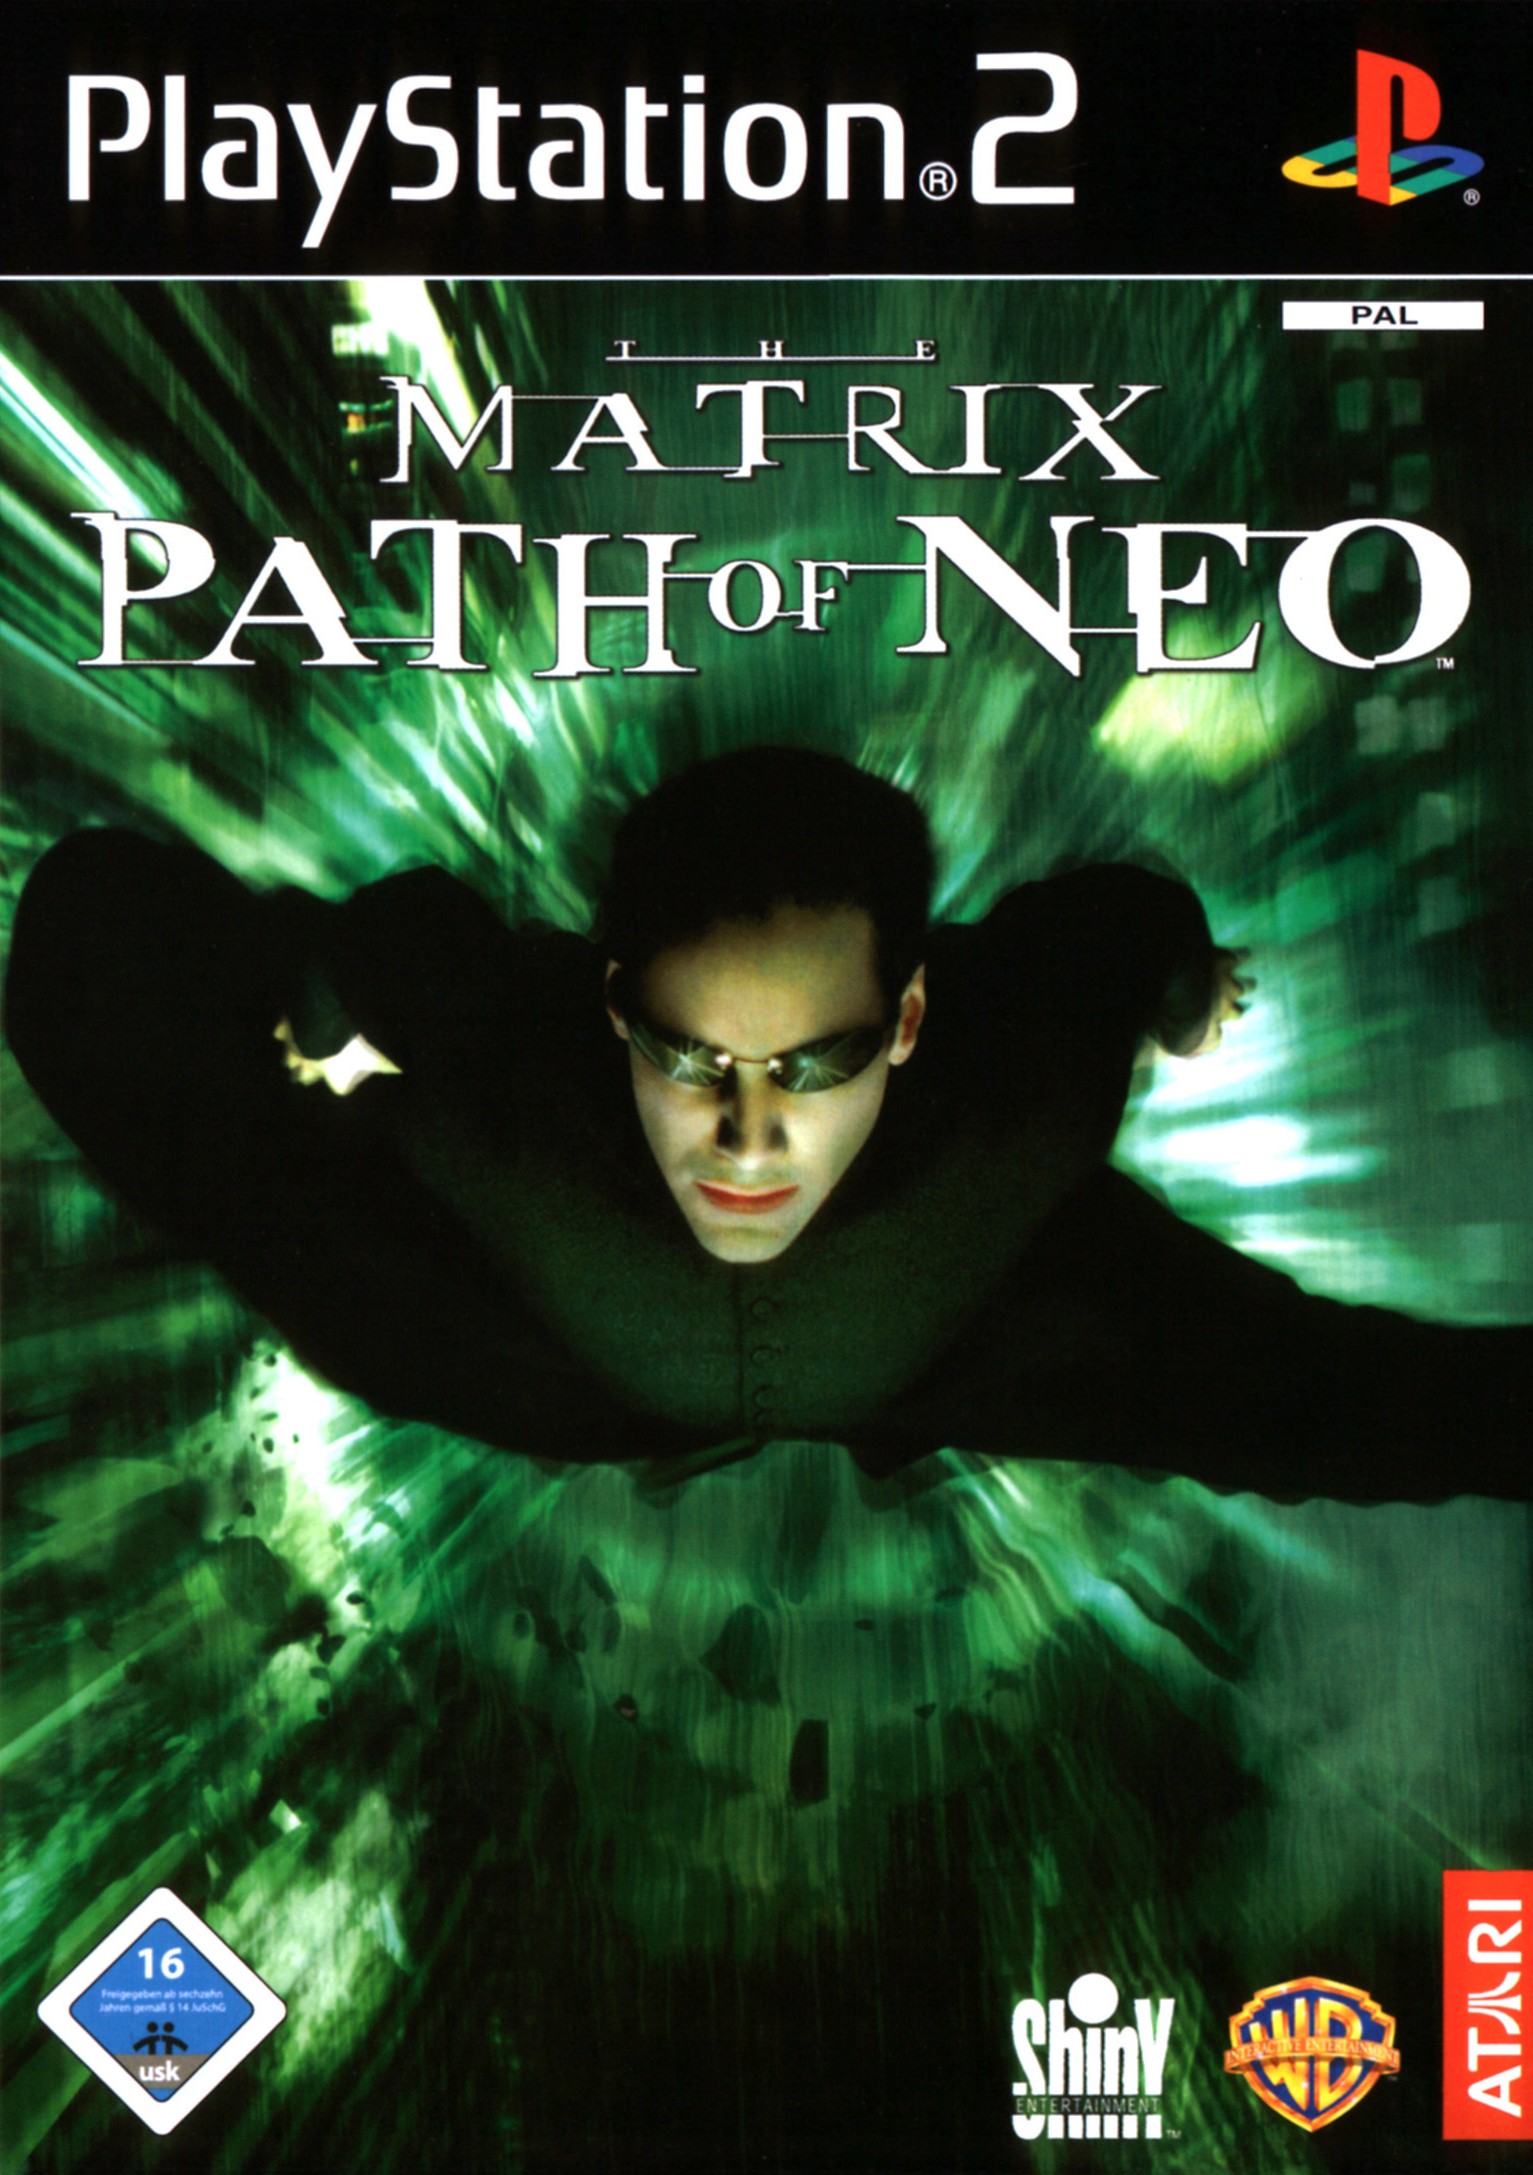 matrix path of neo pc torrent